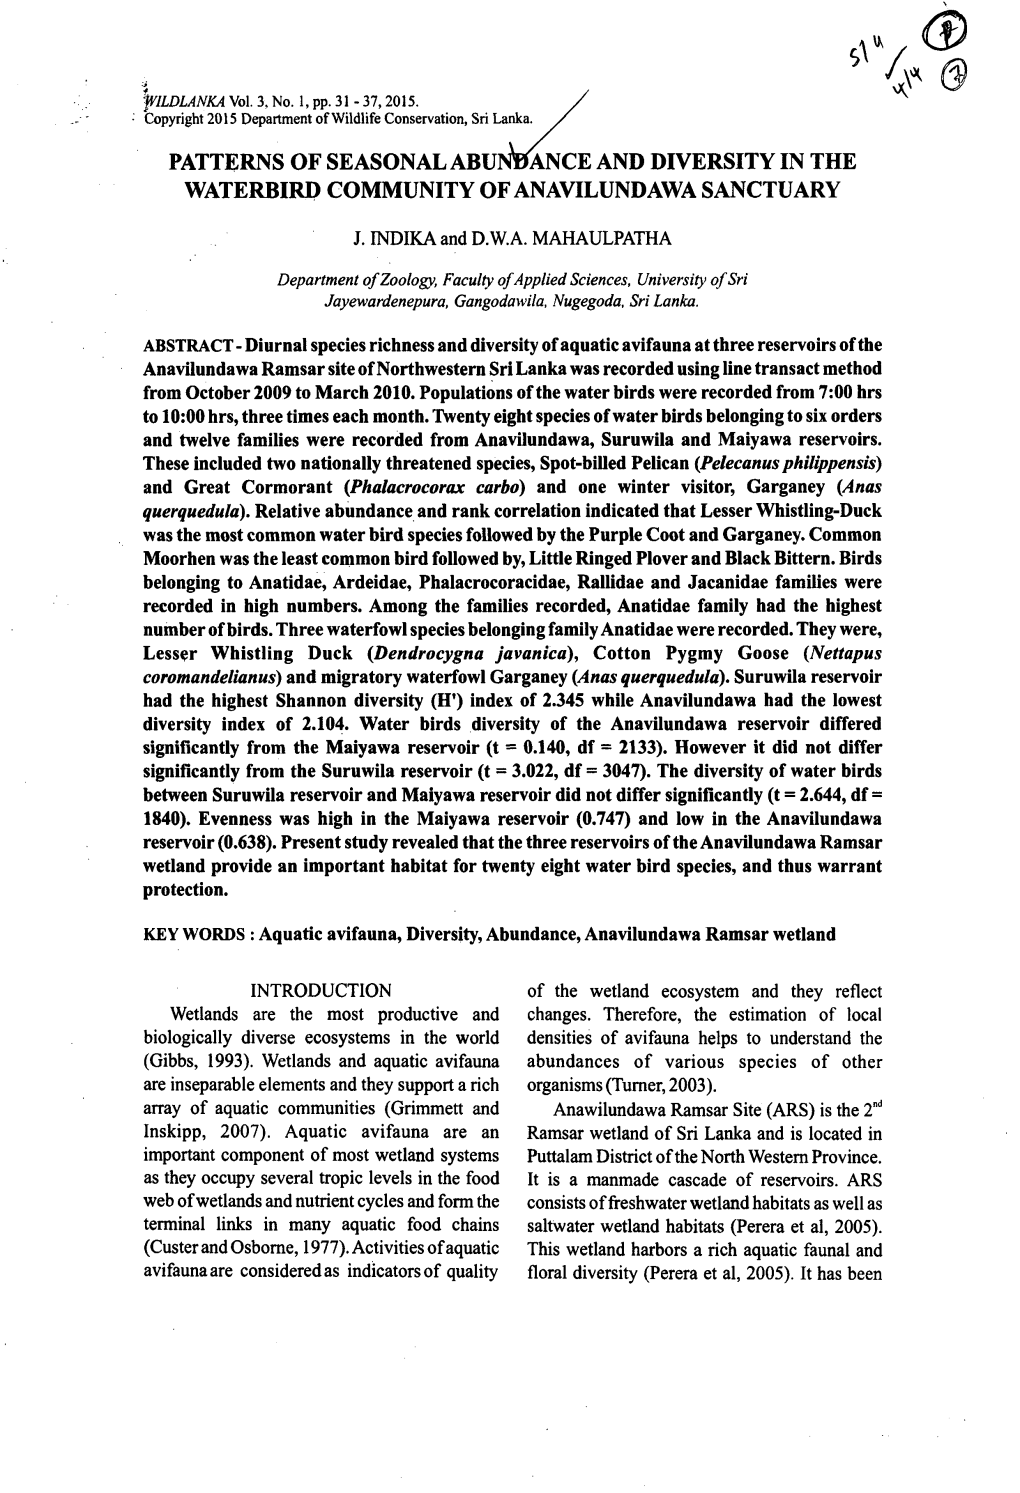 PATTERNS of SEASONAL Abulj'efance and DIVERSITY in the WATERBIRD COMMUNITY of ANAVILUNDAWA SANCTUARY